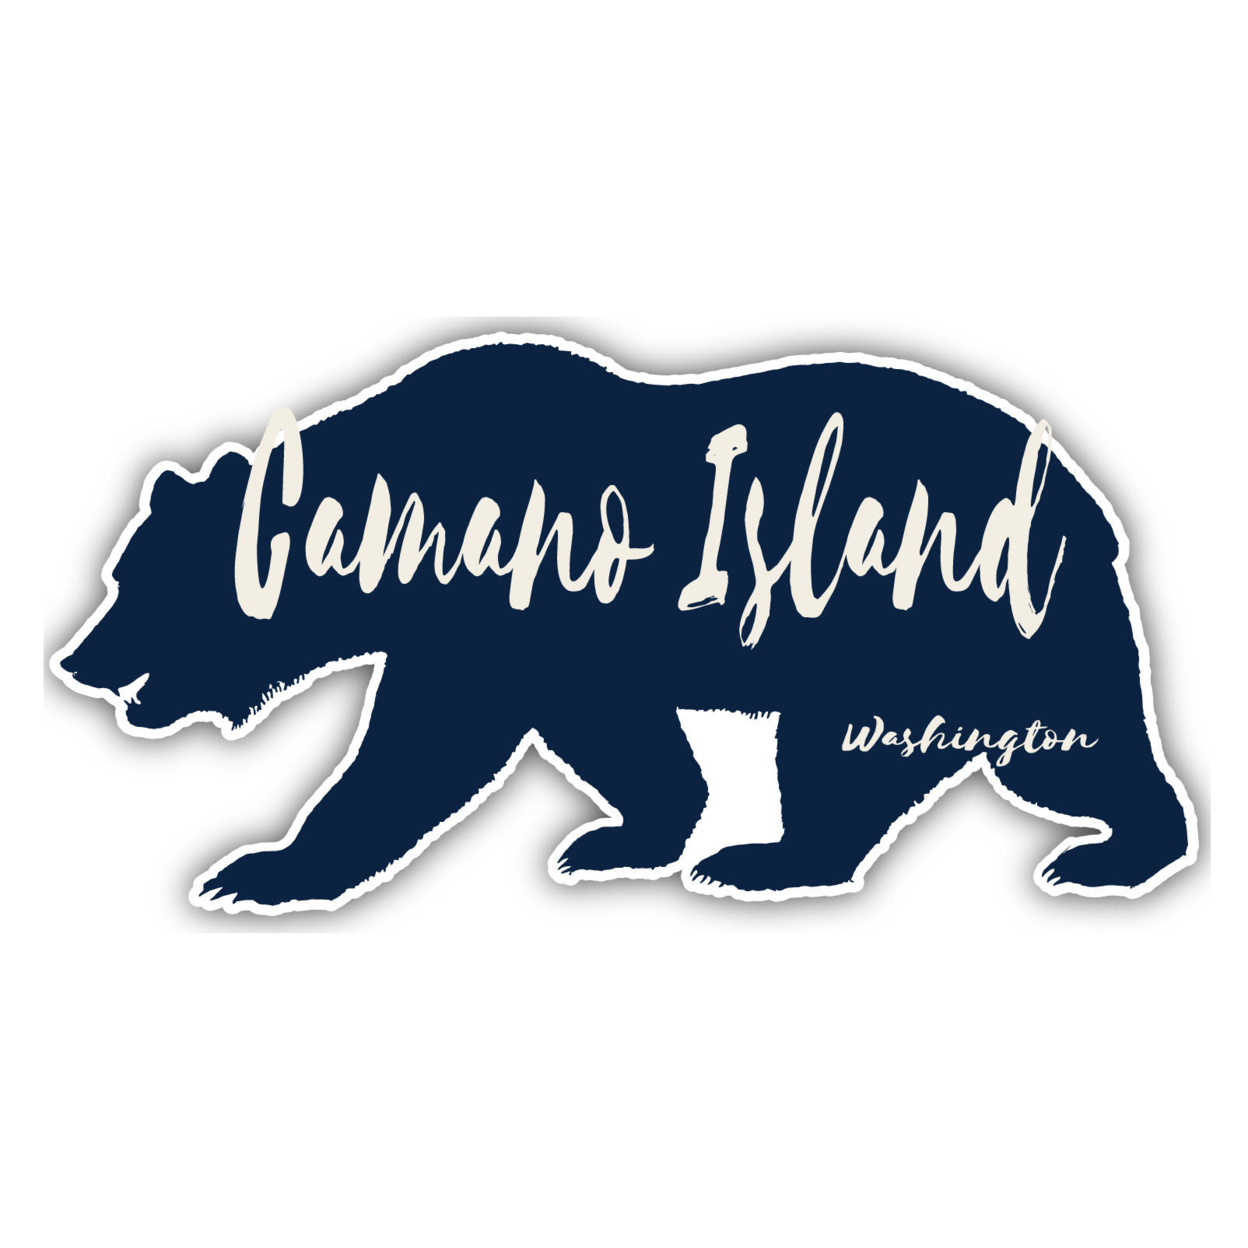 Camano Island Washington Souvenir Decorative Stickers (Choose Theme And Size) - 4-Pack, 4-Inch, Adventures Awaits